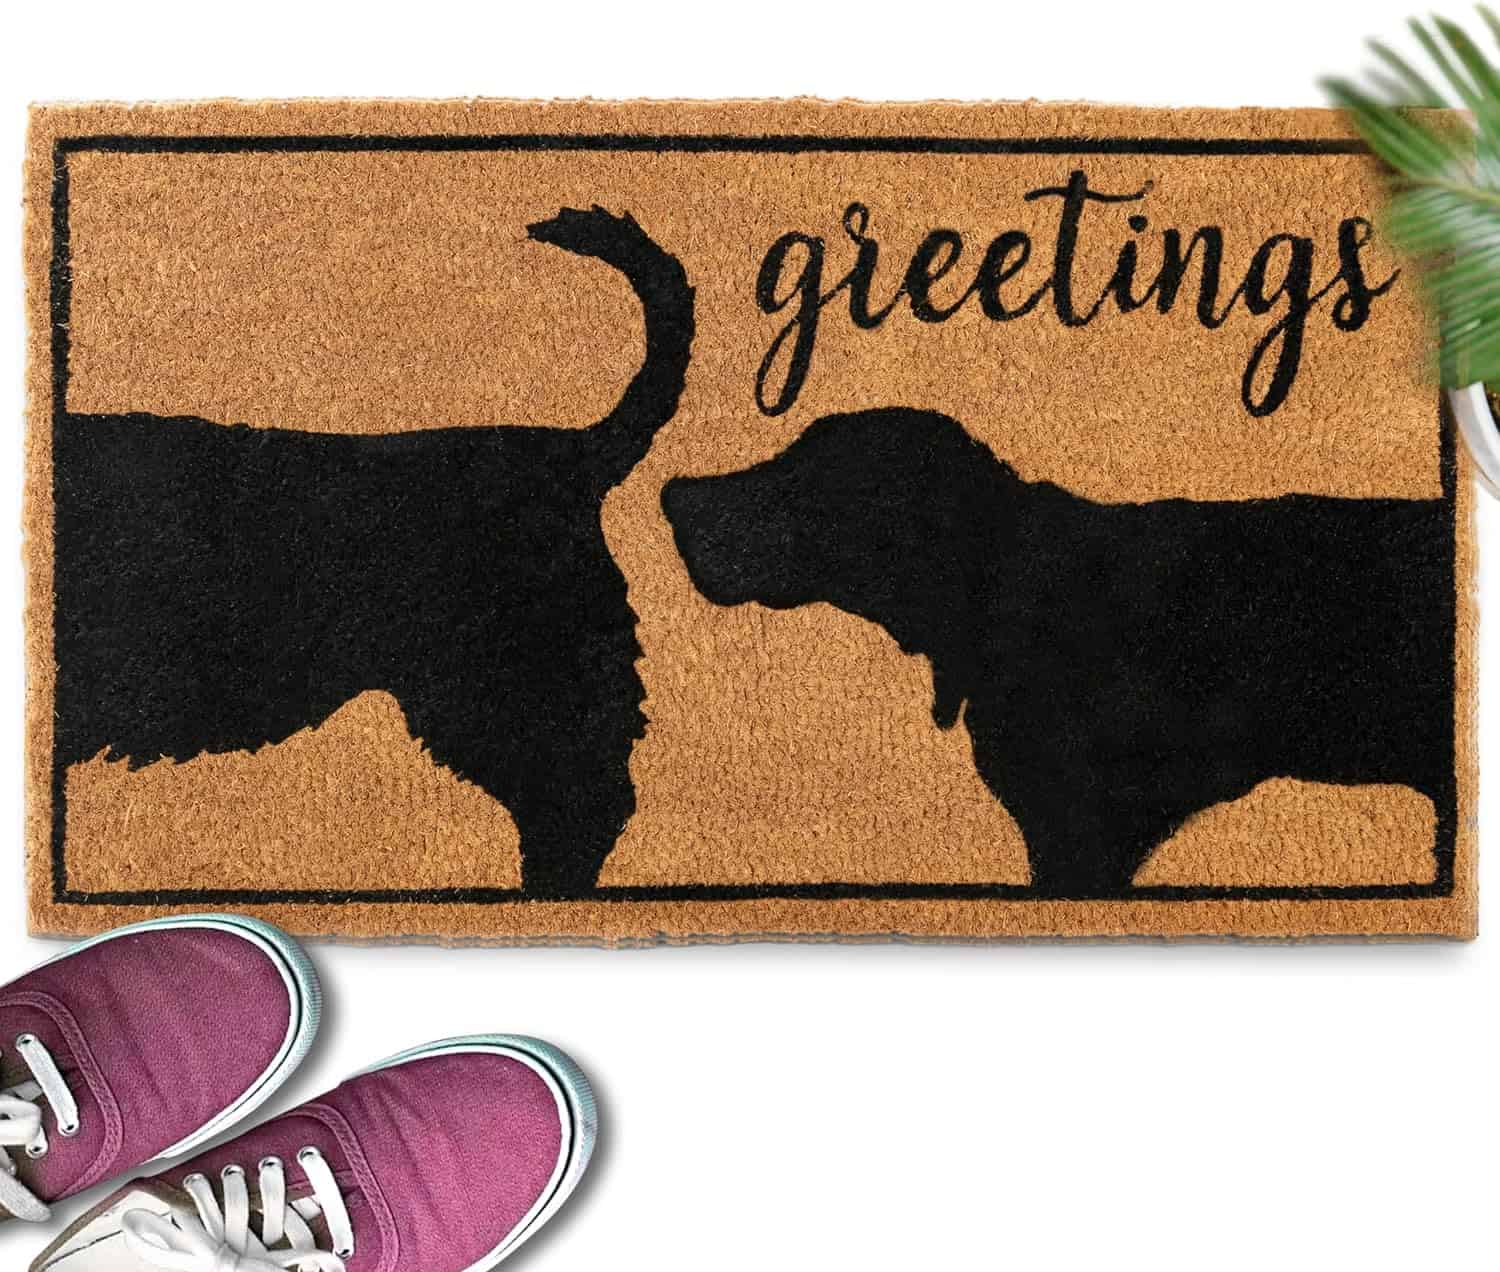 Dog Greeting Doormat